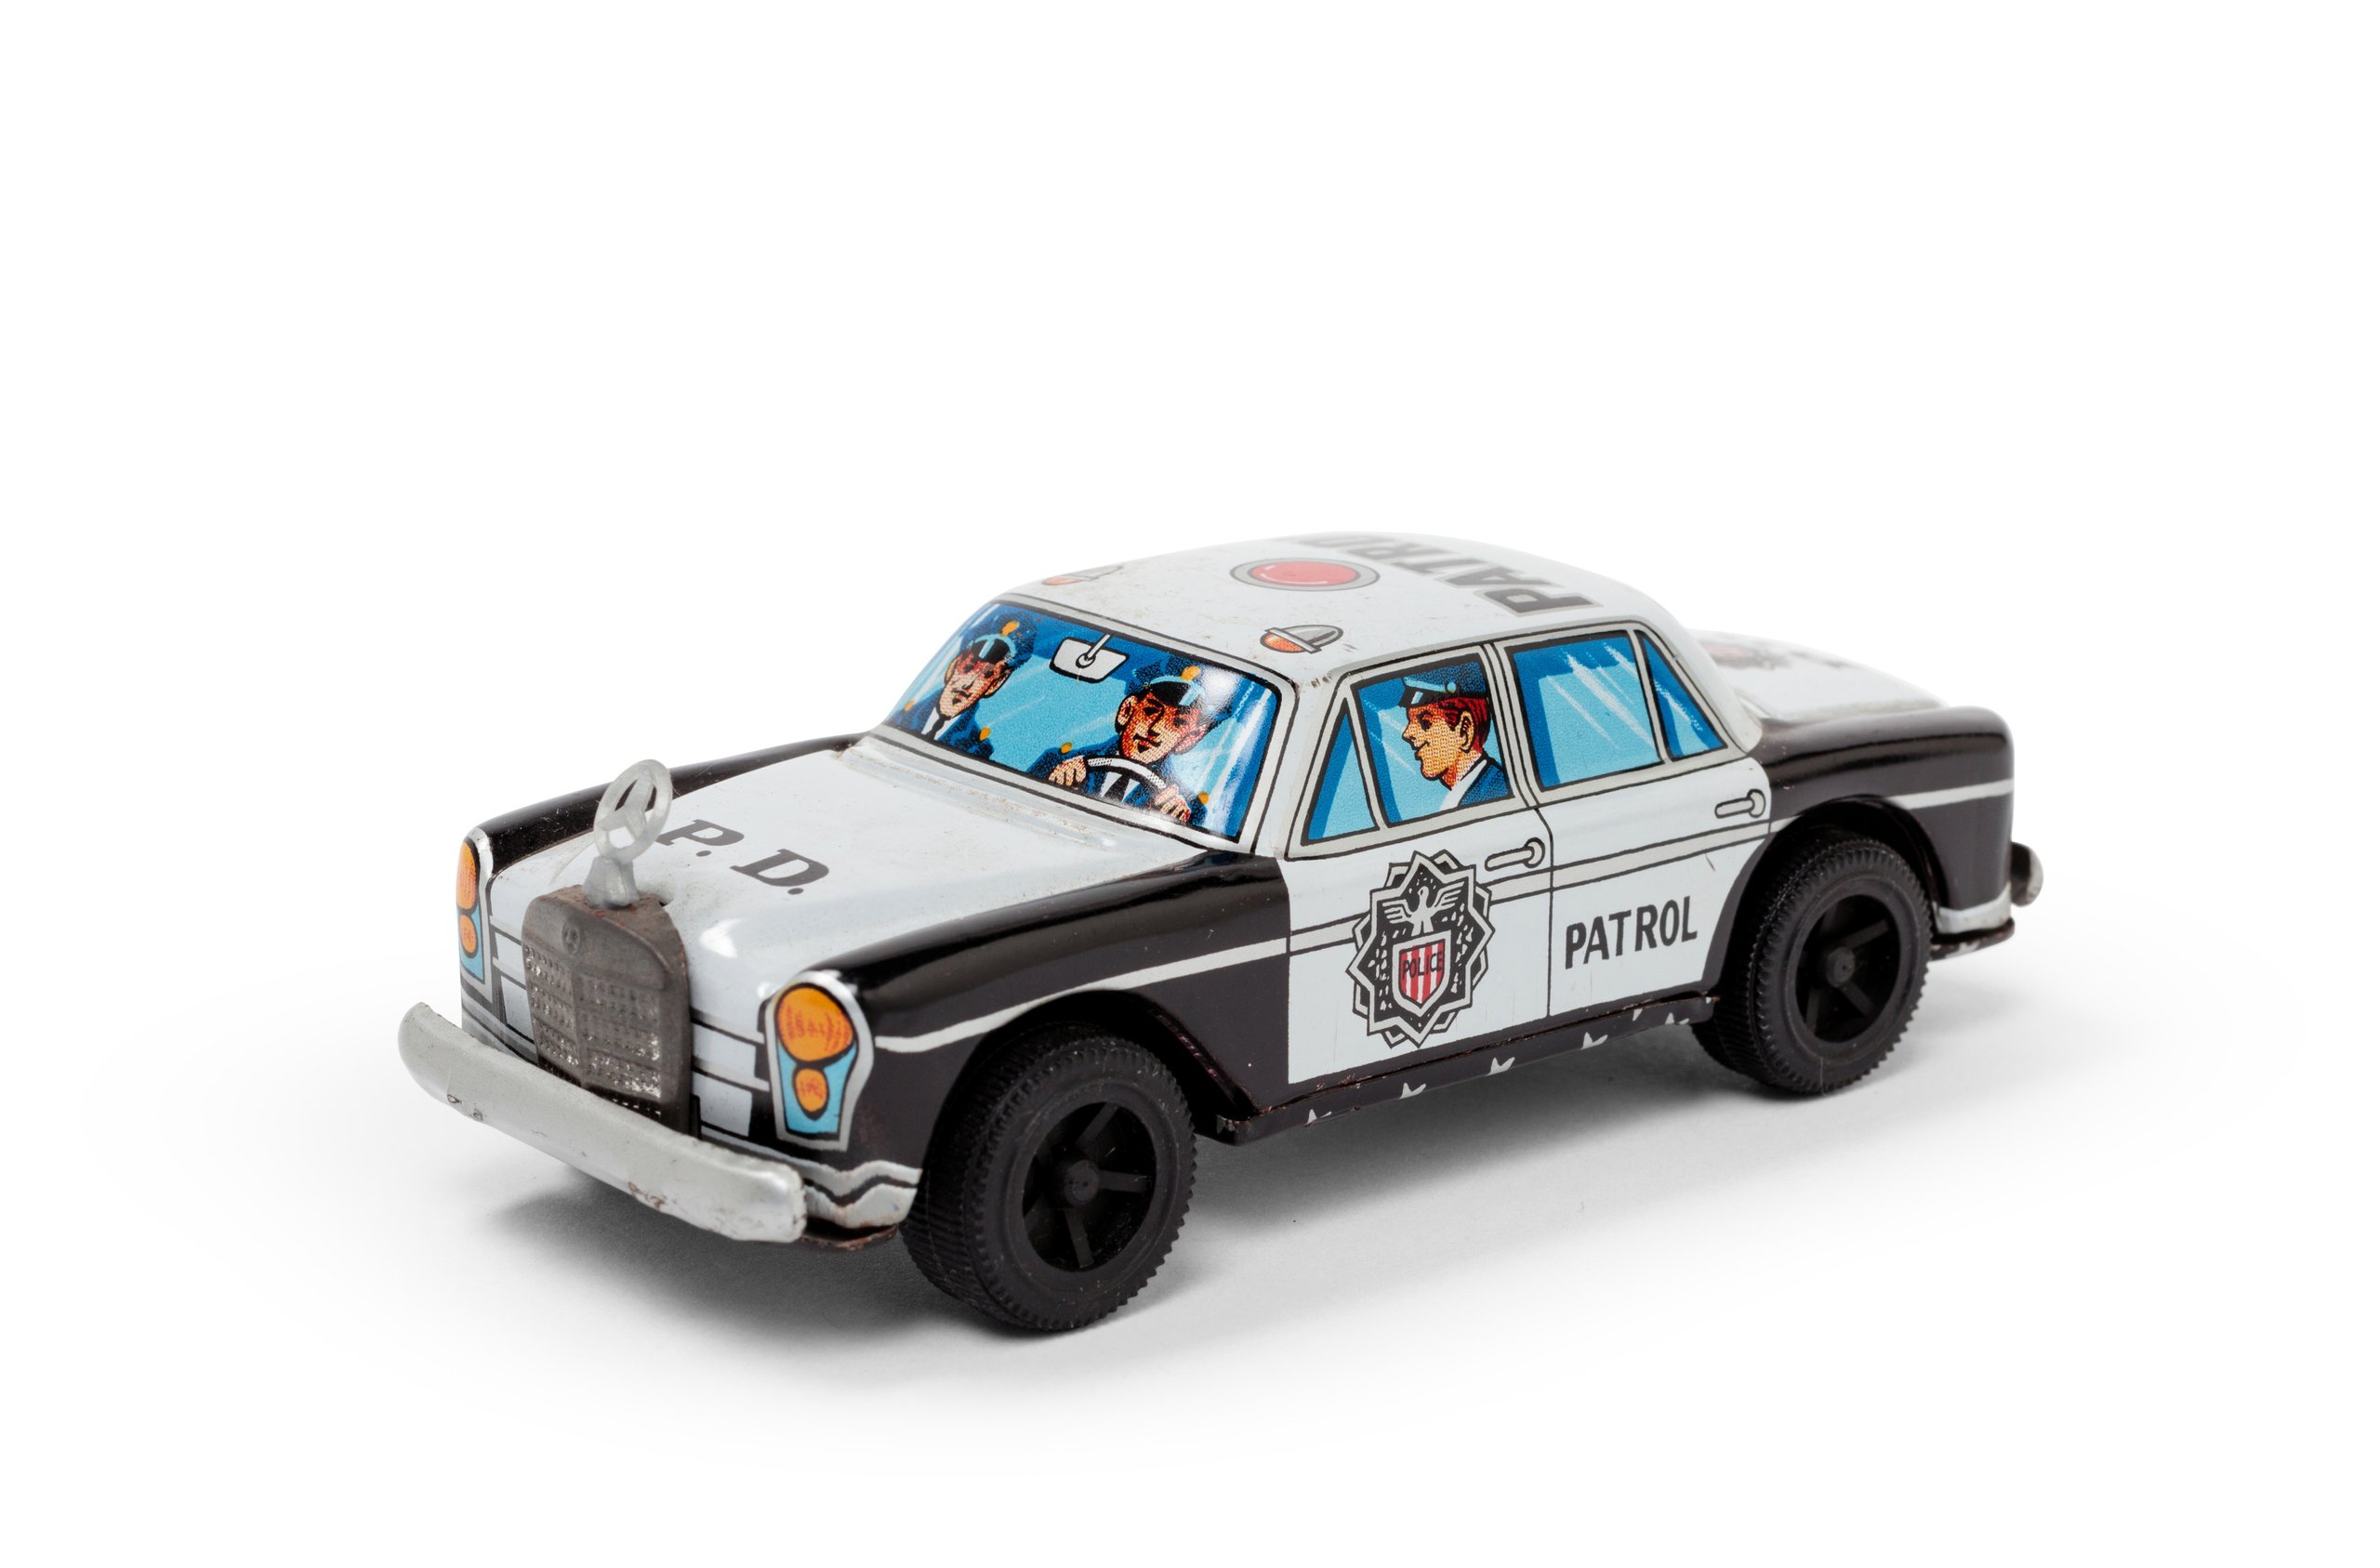 Mercedes Benz toy police car